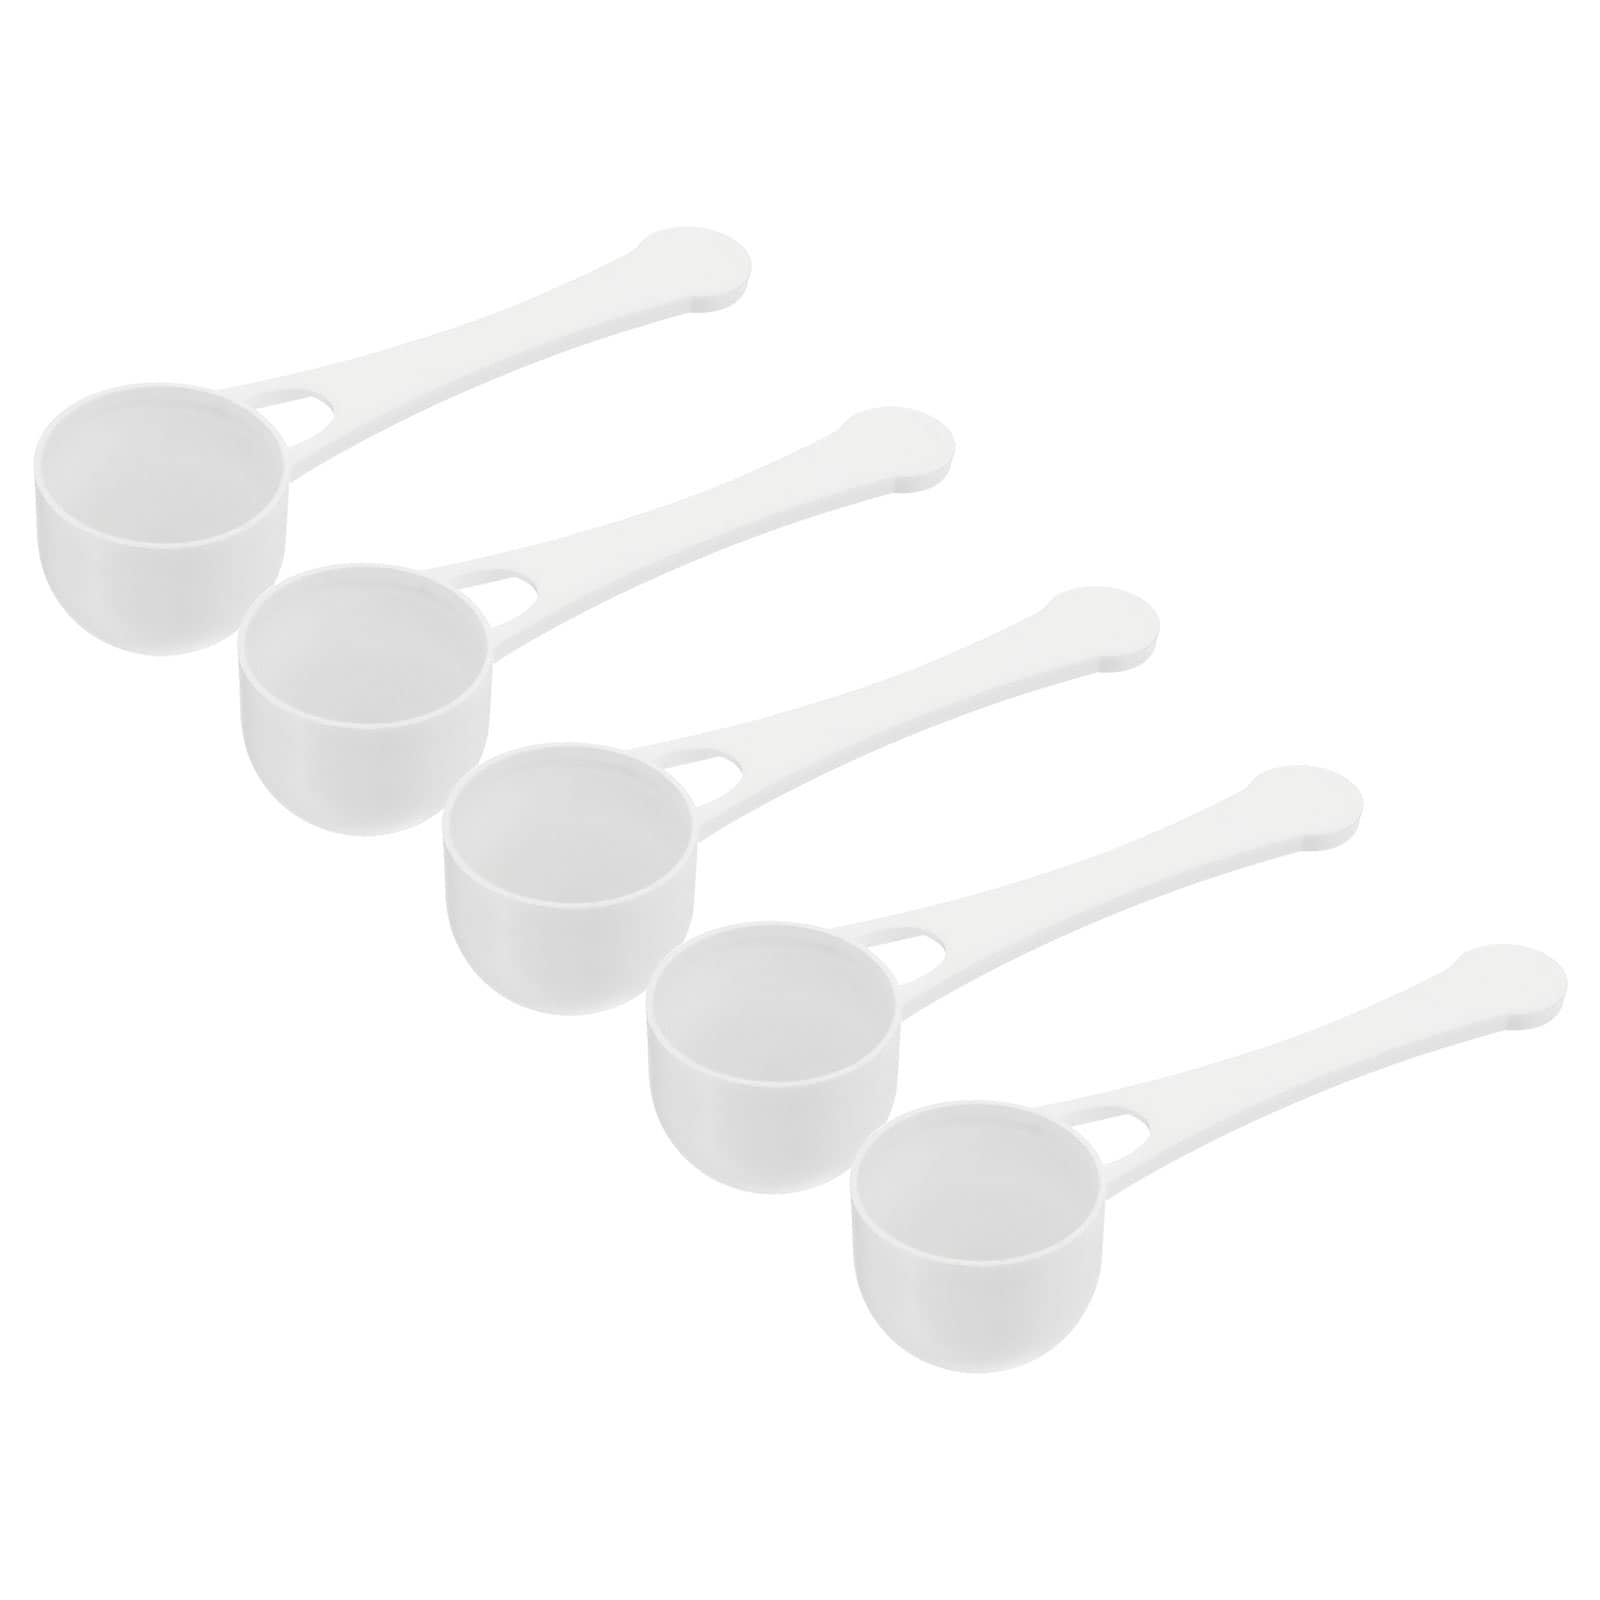 Micro Spoons 5 Gram Measuring Scoop Plastic Round Bottom W Hole 30pcs - White